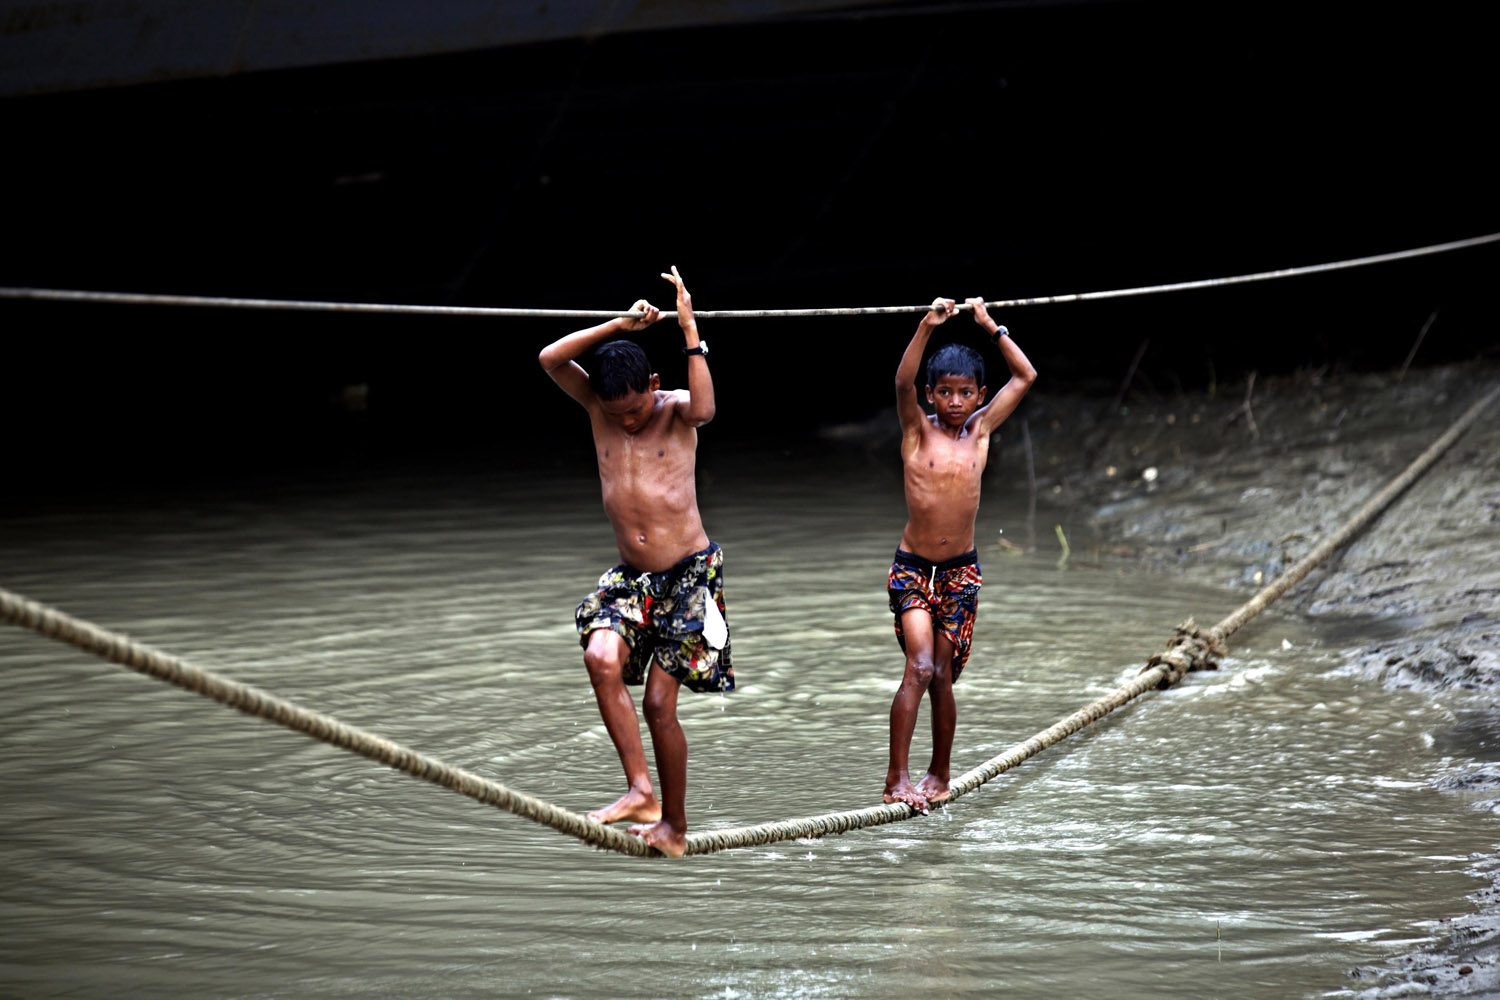 Nov. 25, 2013. Boys play on docking ropes near a dockyard on Hlaing river in Yangon, Myanmar.